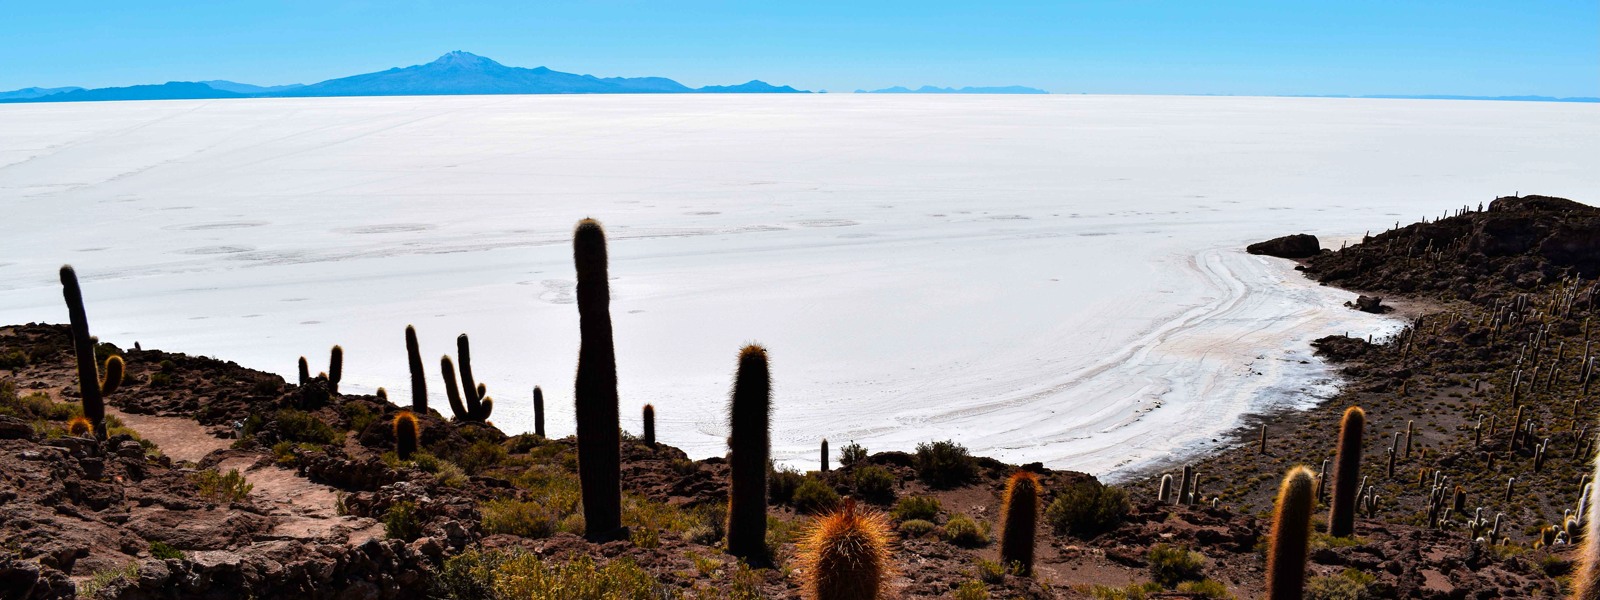 Tourists enjoying a 3 day Salar de Uyuni experience in Bolivia